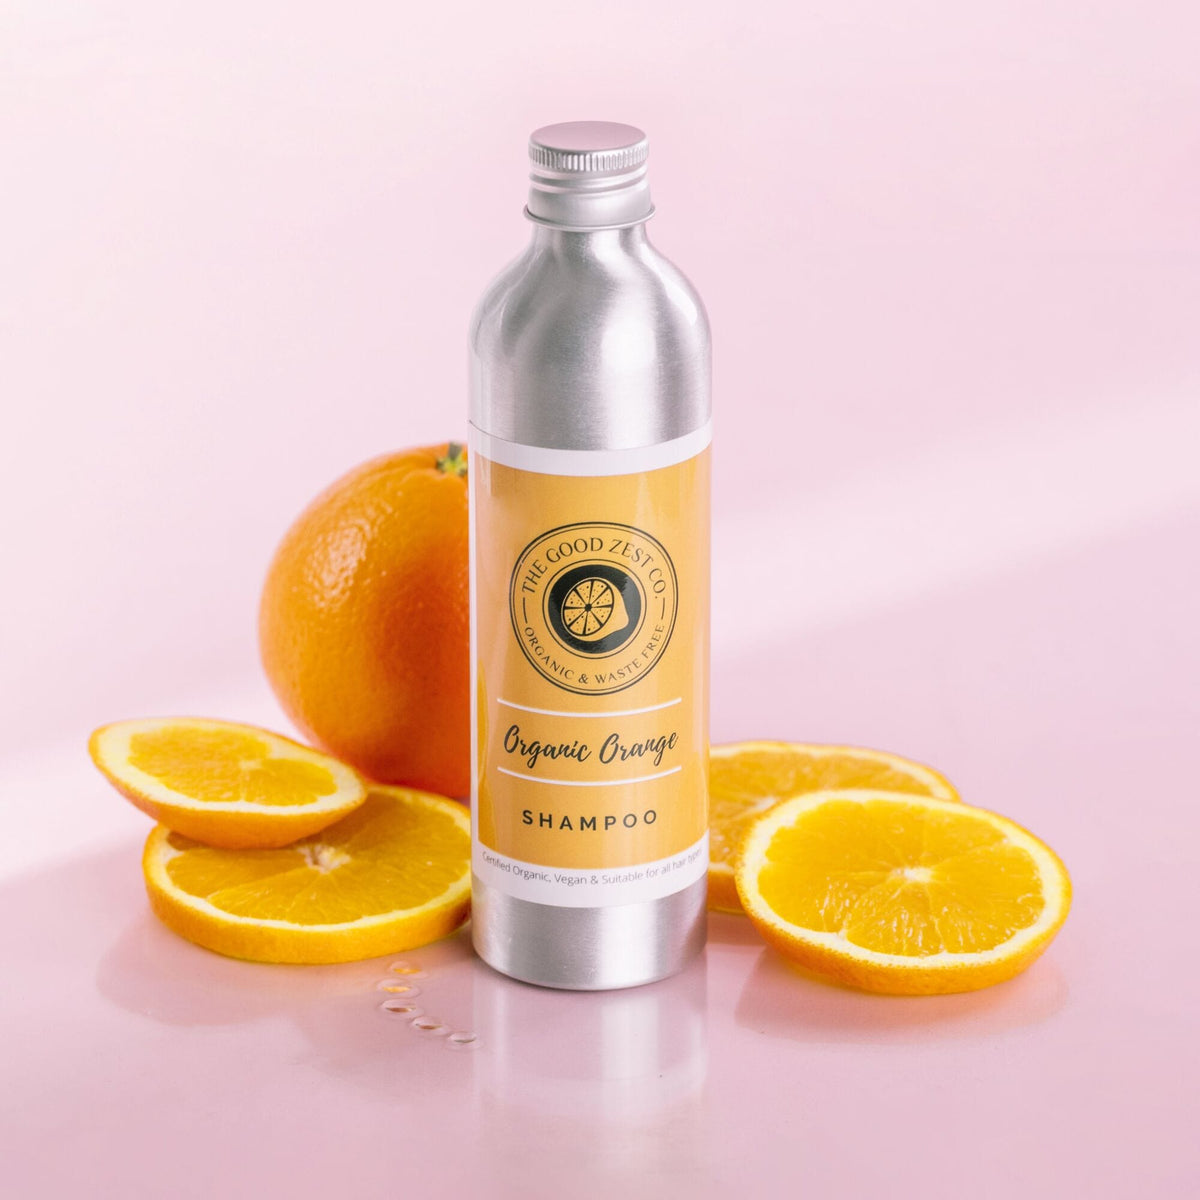 The Good Zest Co. Organic Orange Shampoo